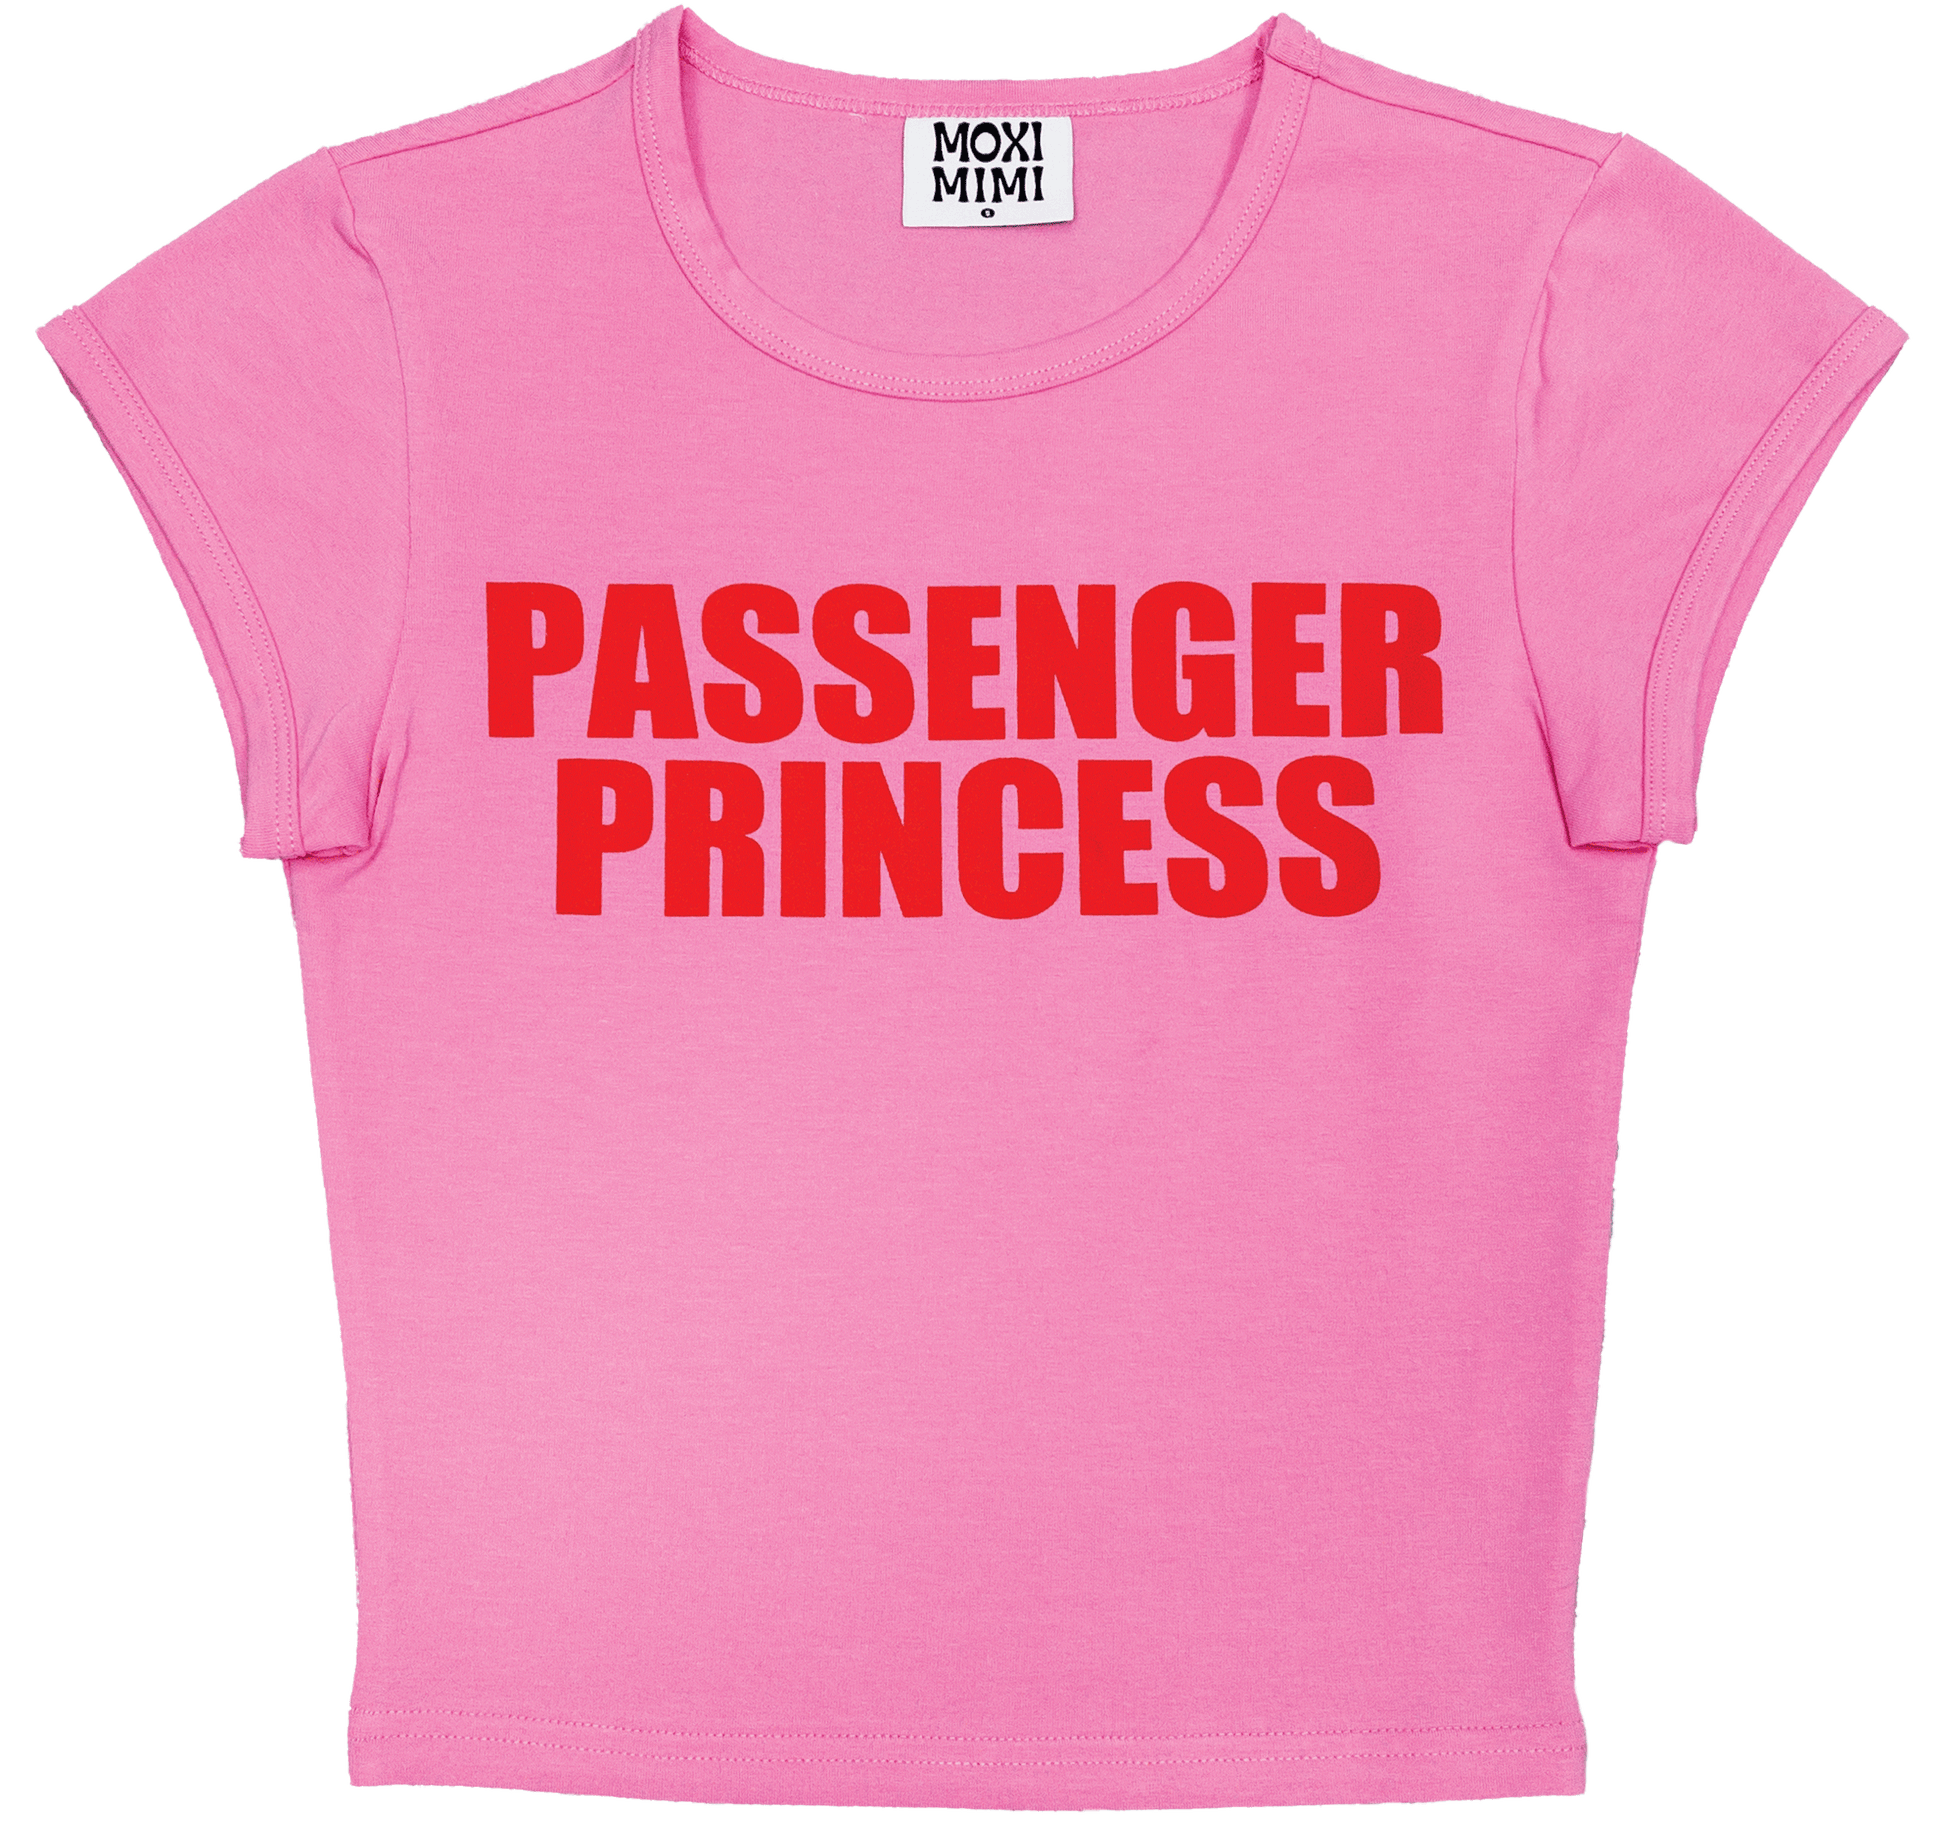 Passenger Princess Baby Tee